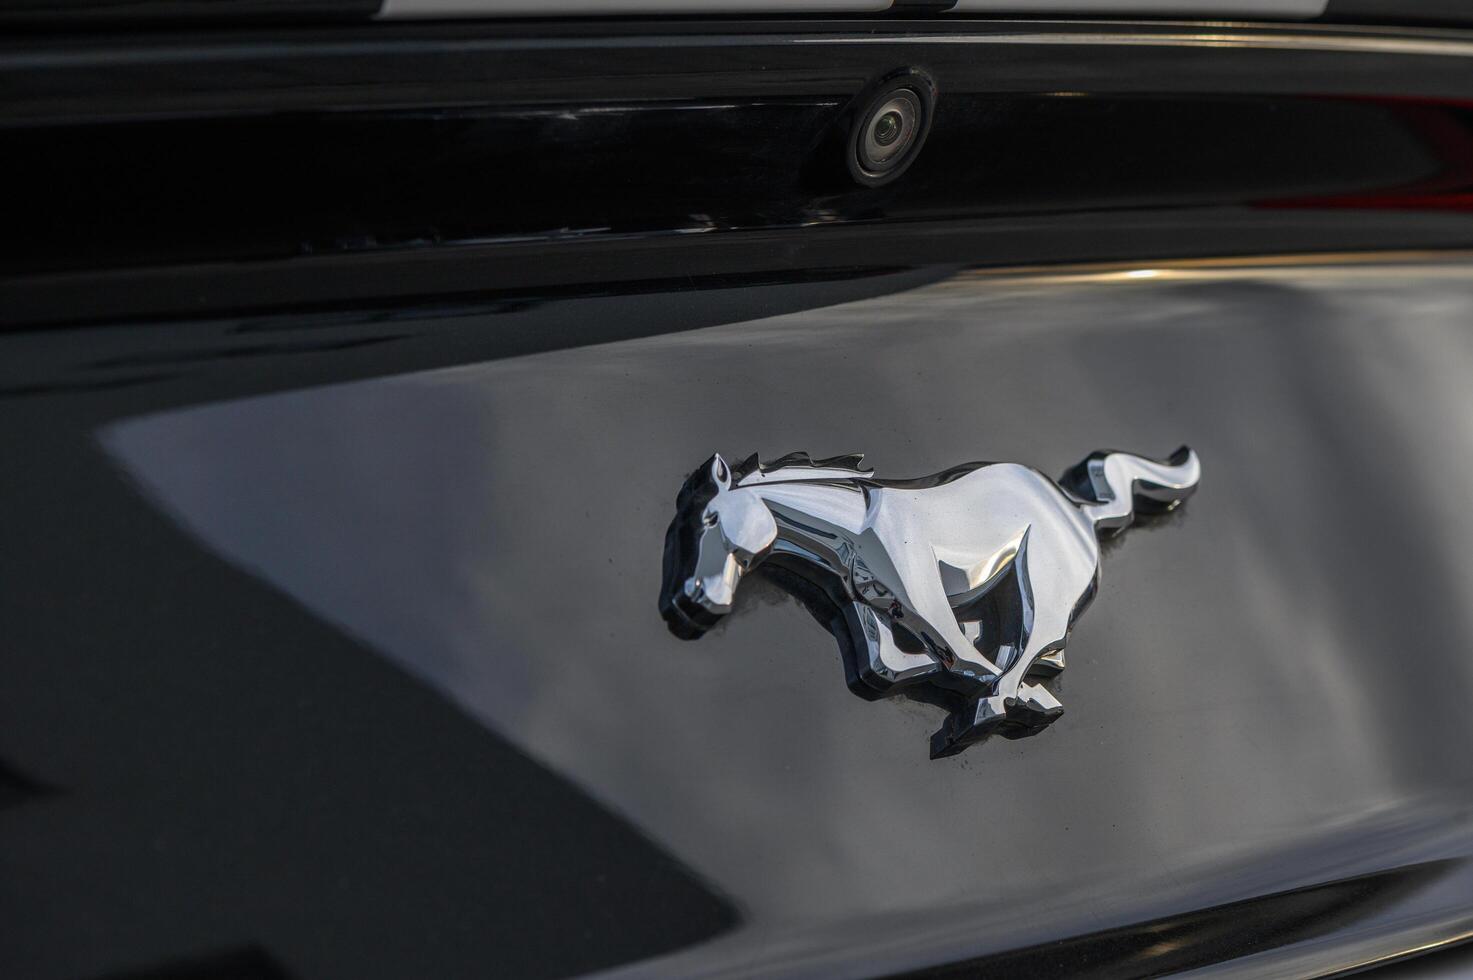 02.29.2024 Gazeveren Cyprus - Ford Mustang emblem on a black trunk lid 6 photo